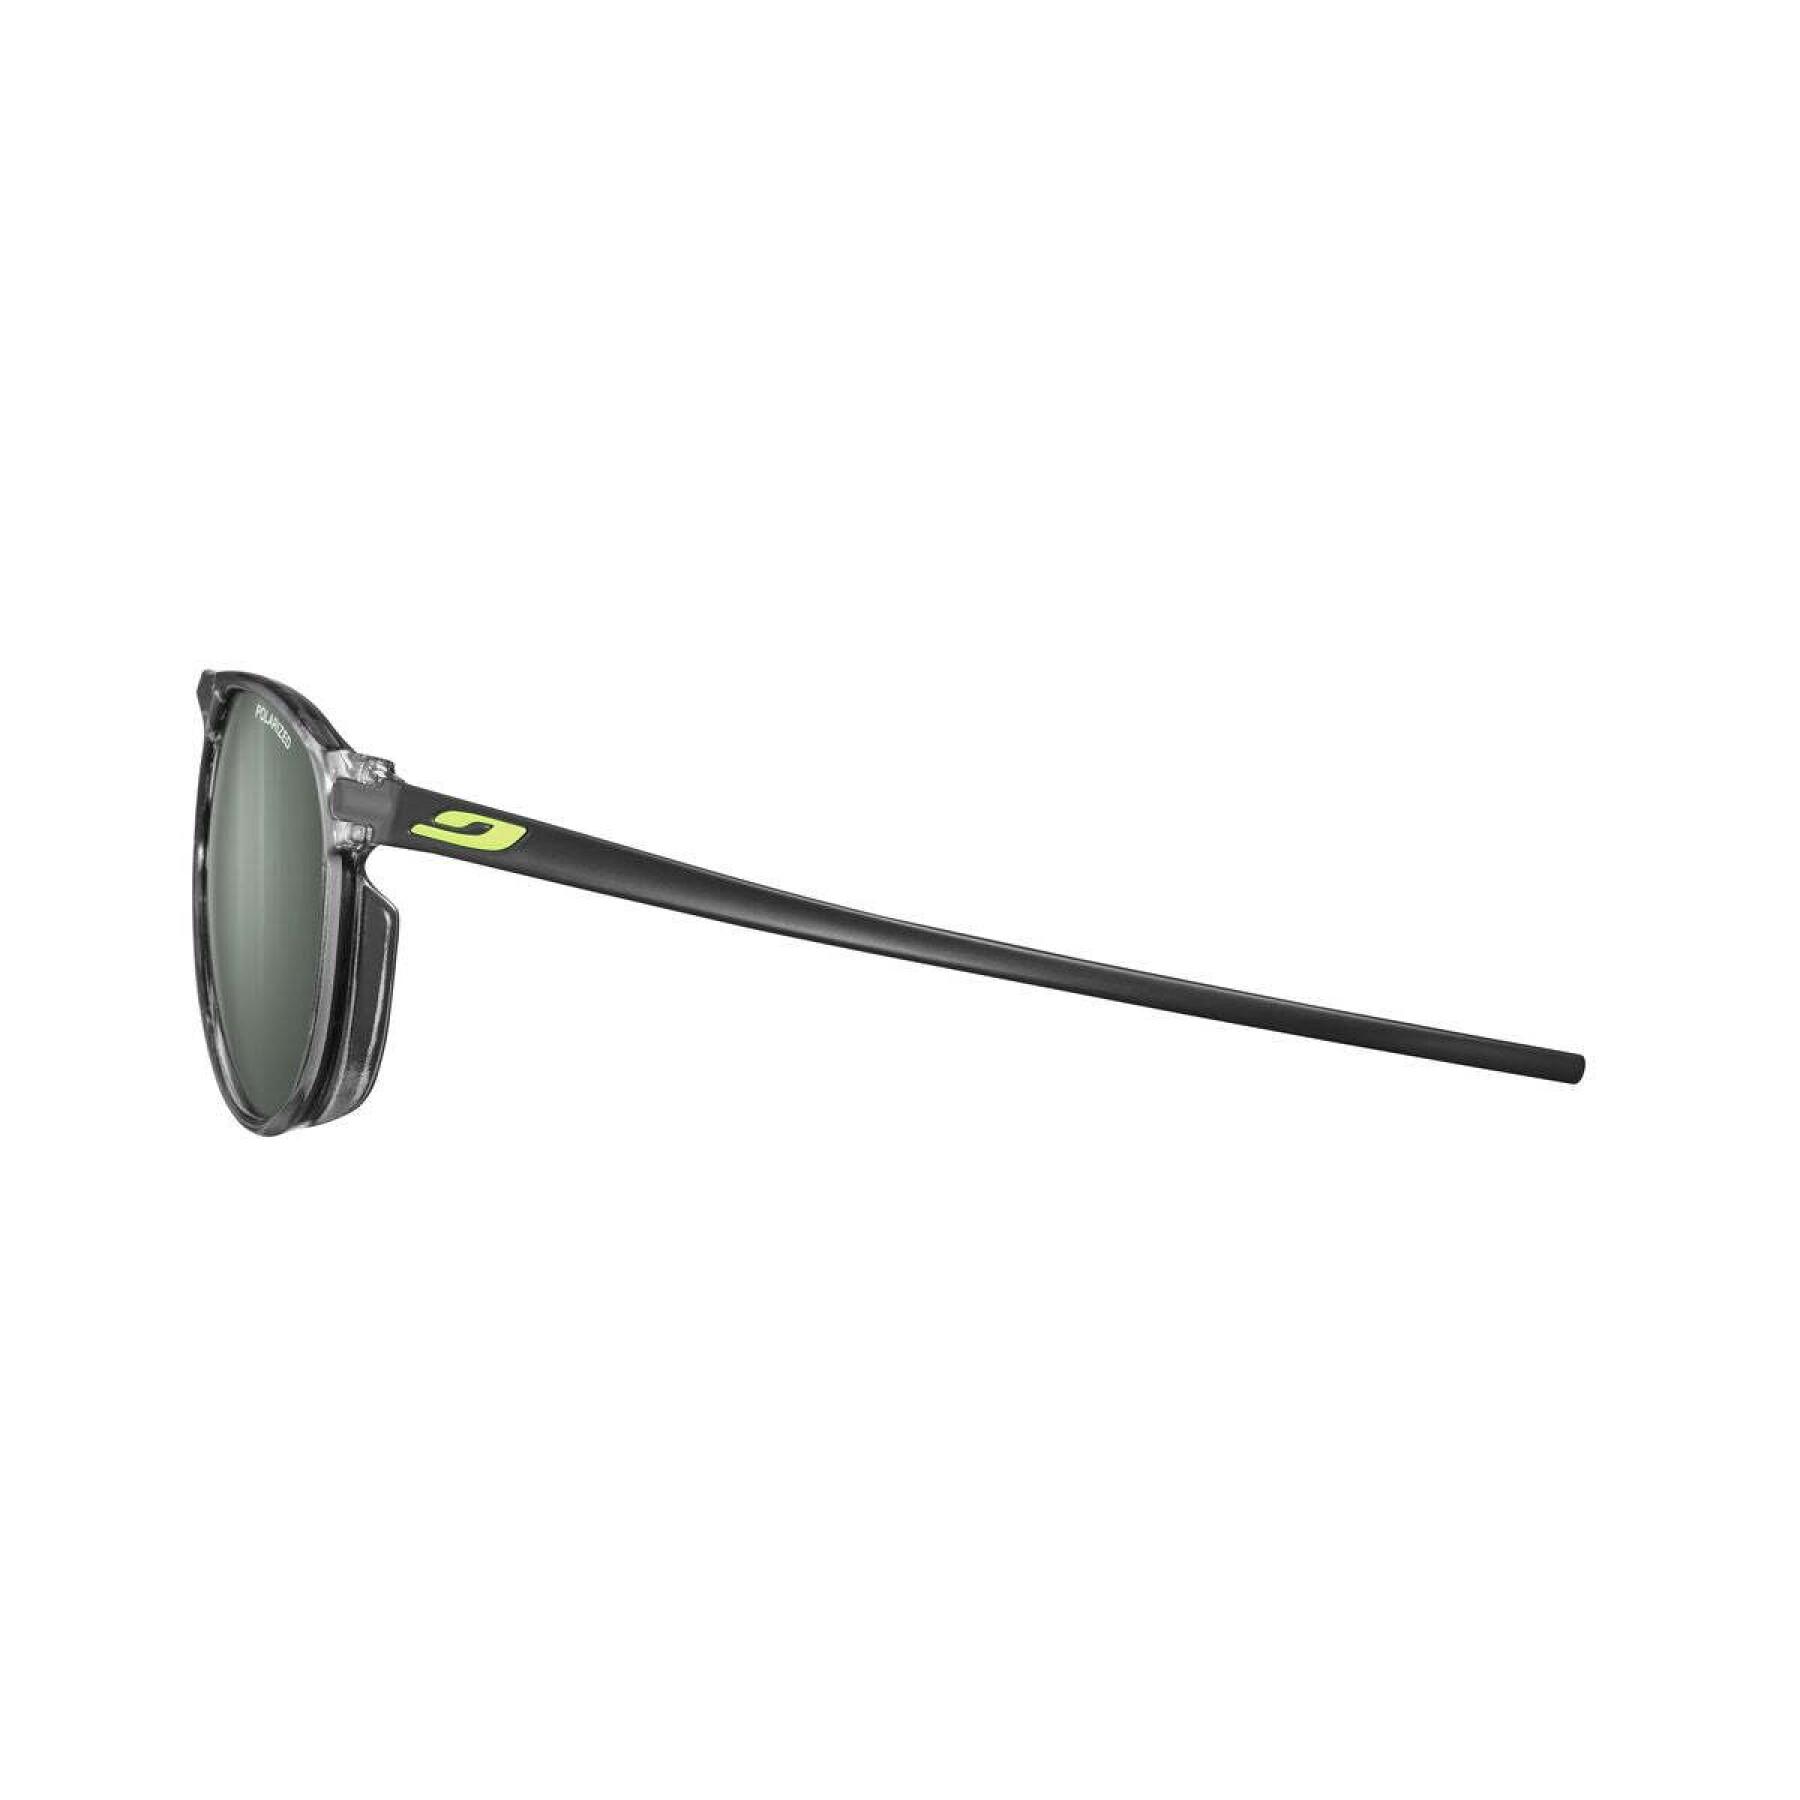 Sunglasses Julbo Meta - Polarized 3